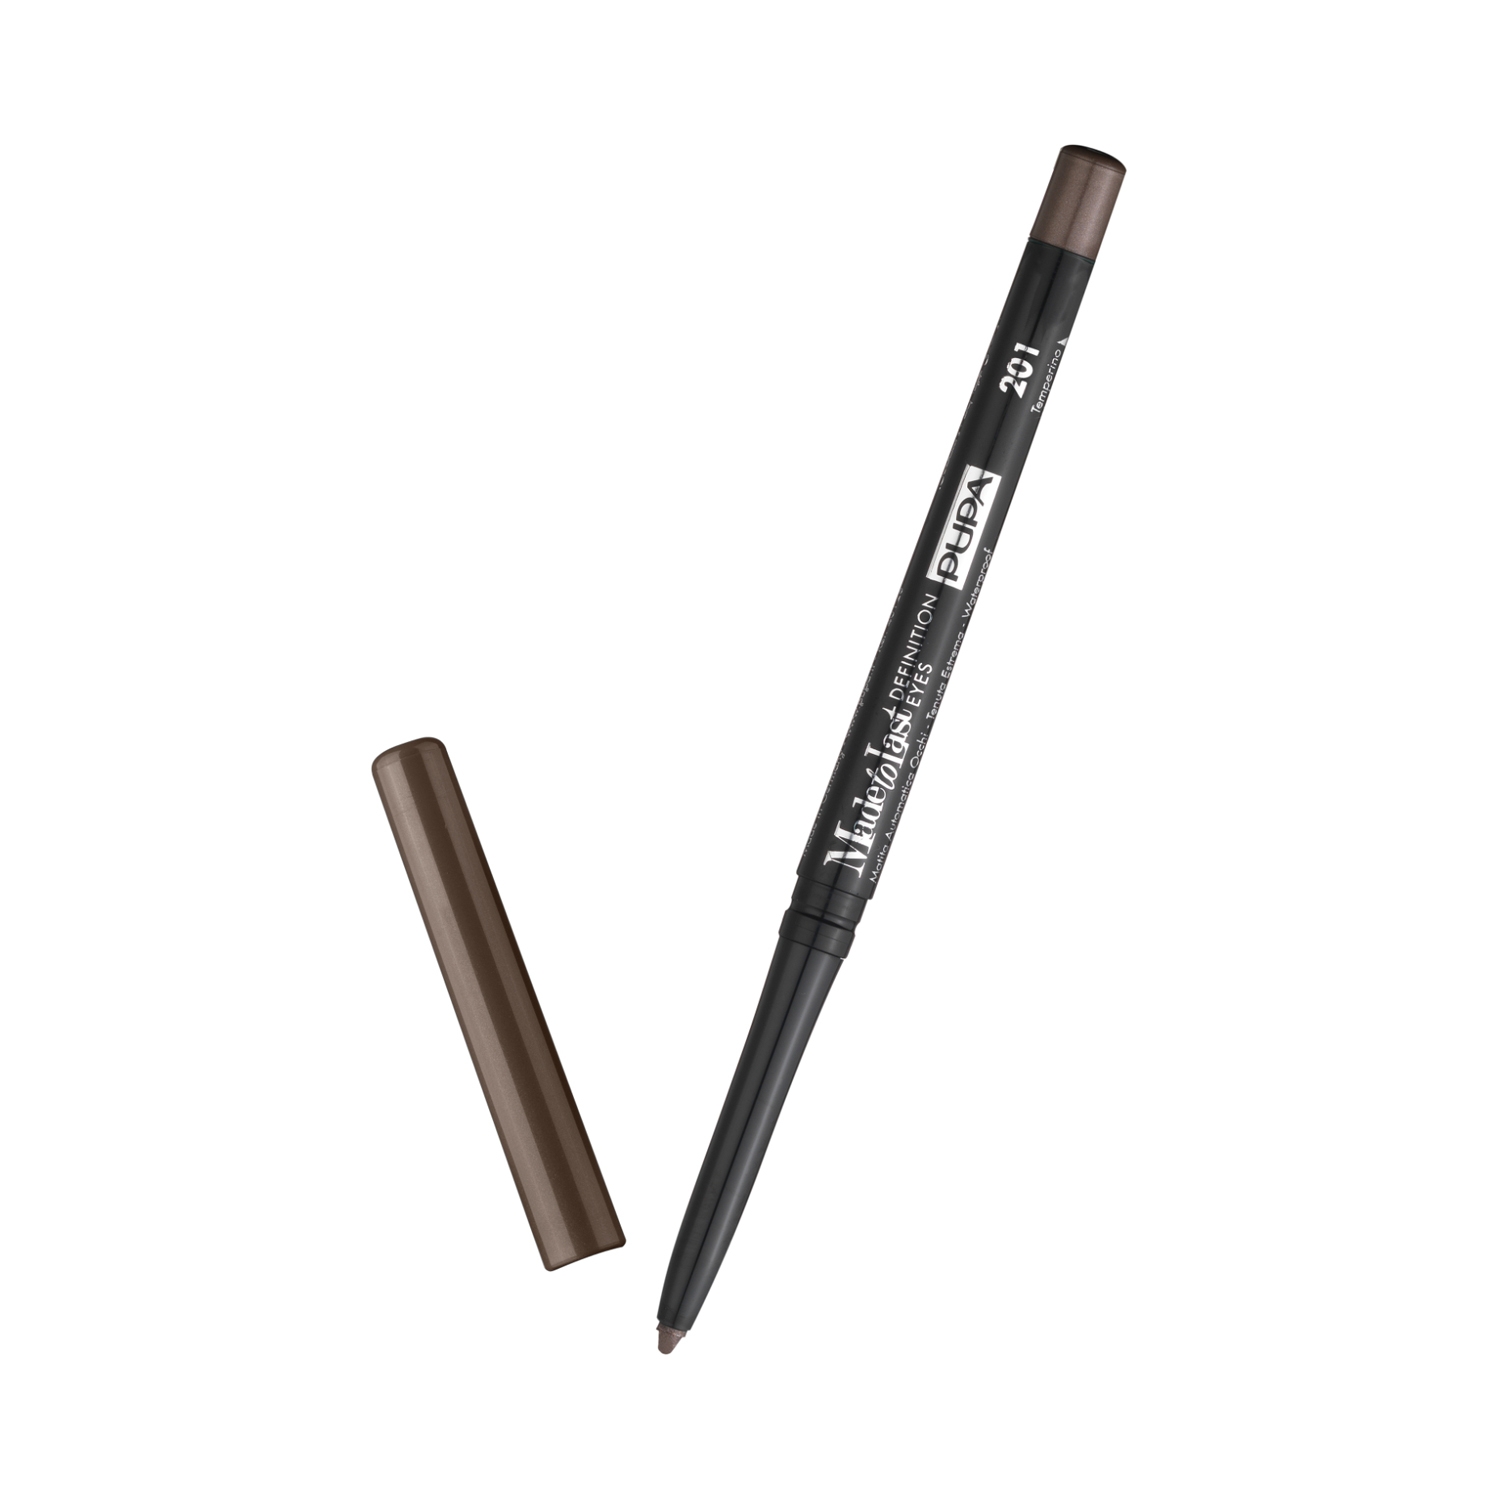 Pupa Milano | Pupa Milano Made To Last Definition Eye Pencil - 201 Bon Ton Brown (0.35g)